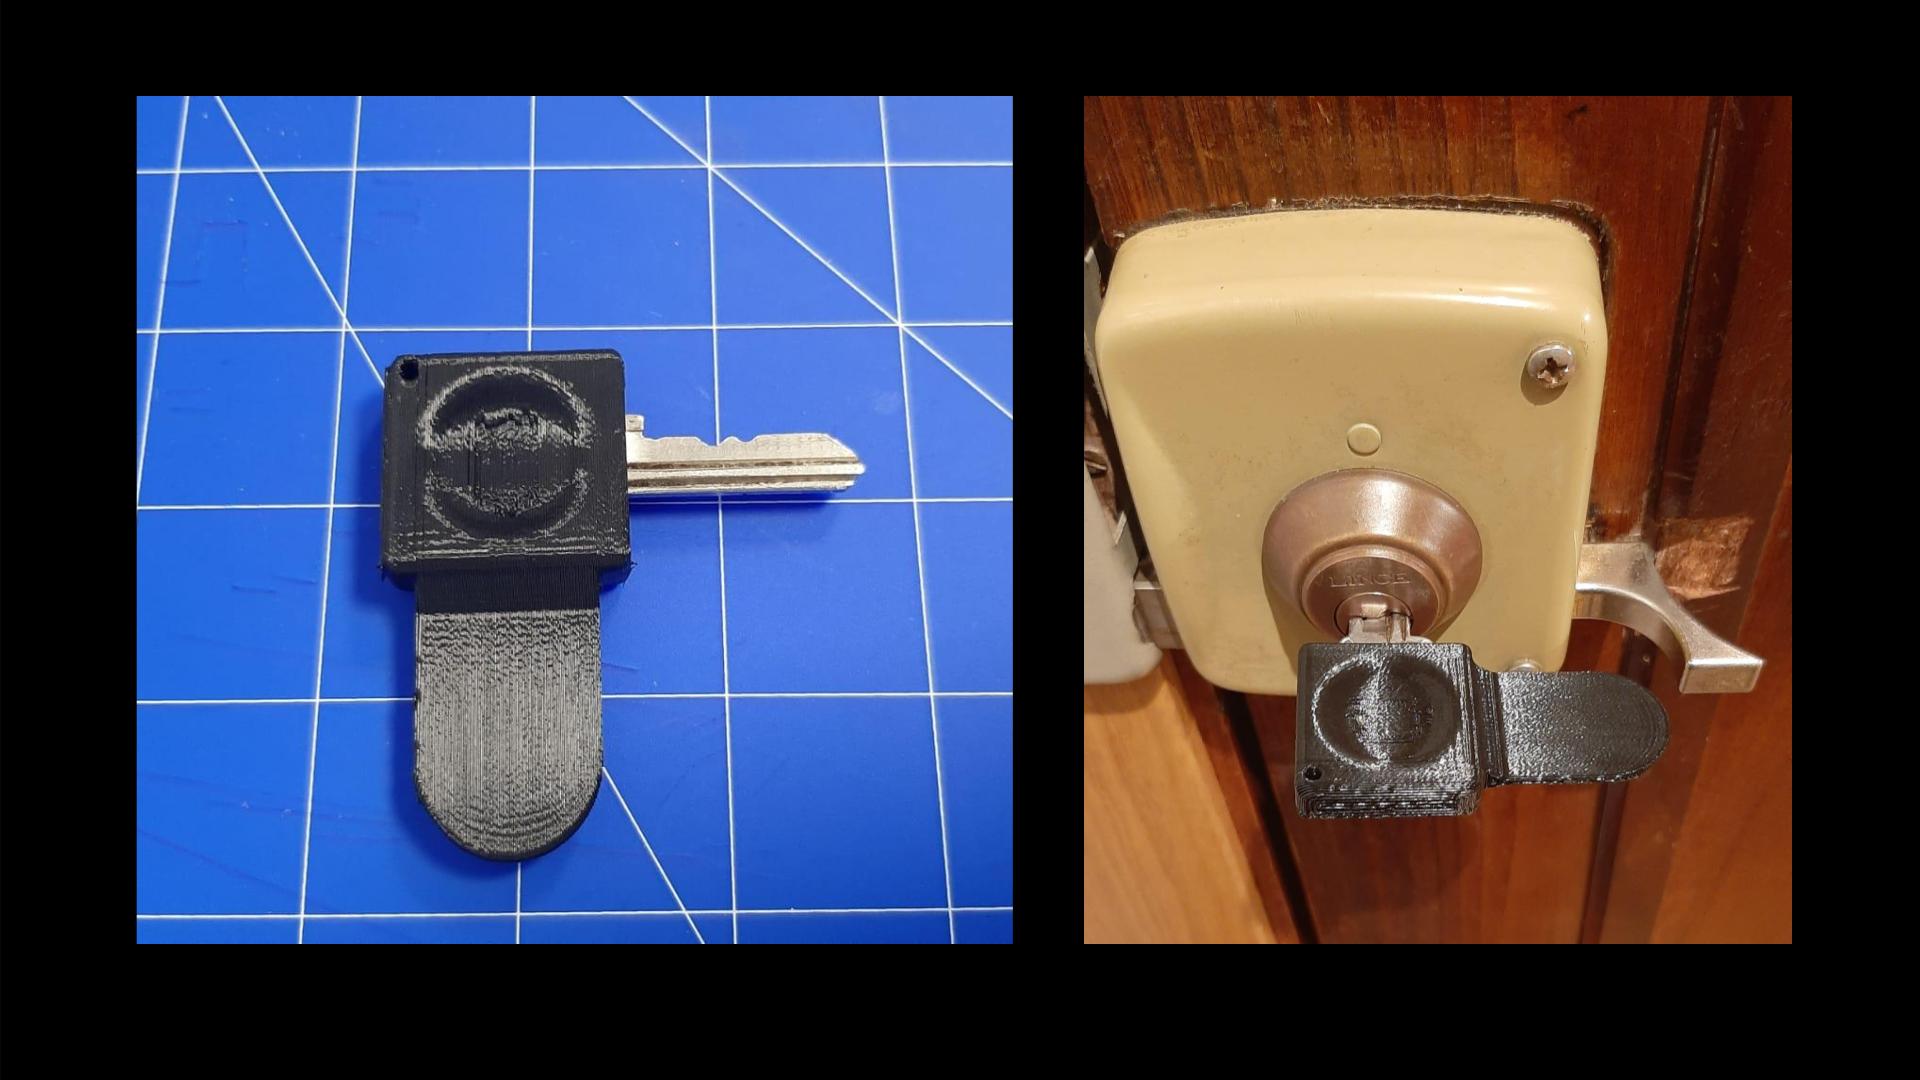 A 3d printed assistive key turner device